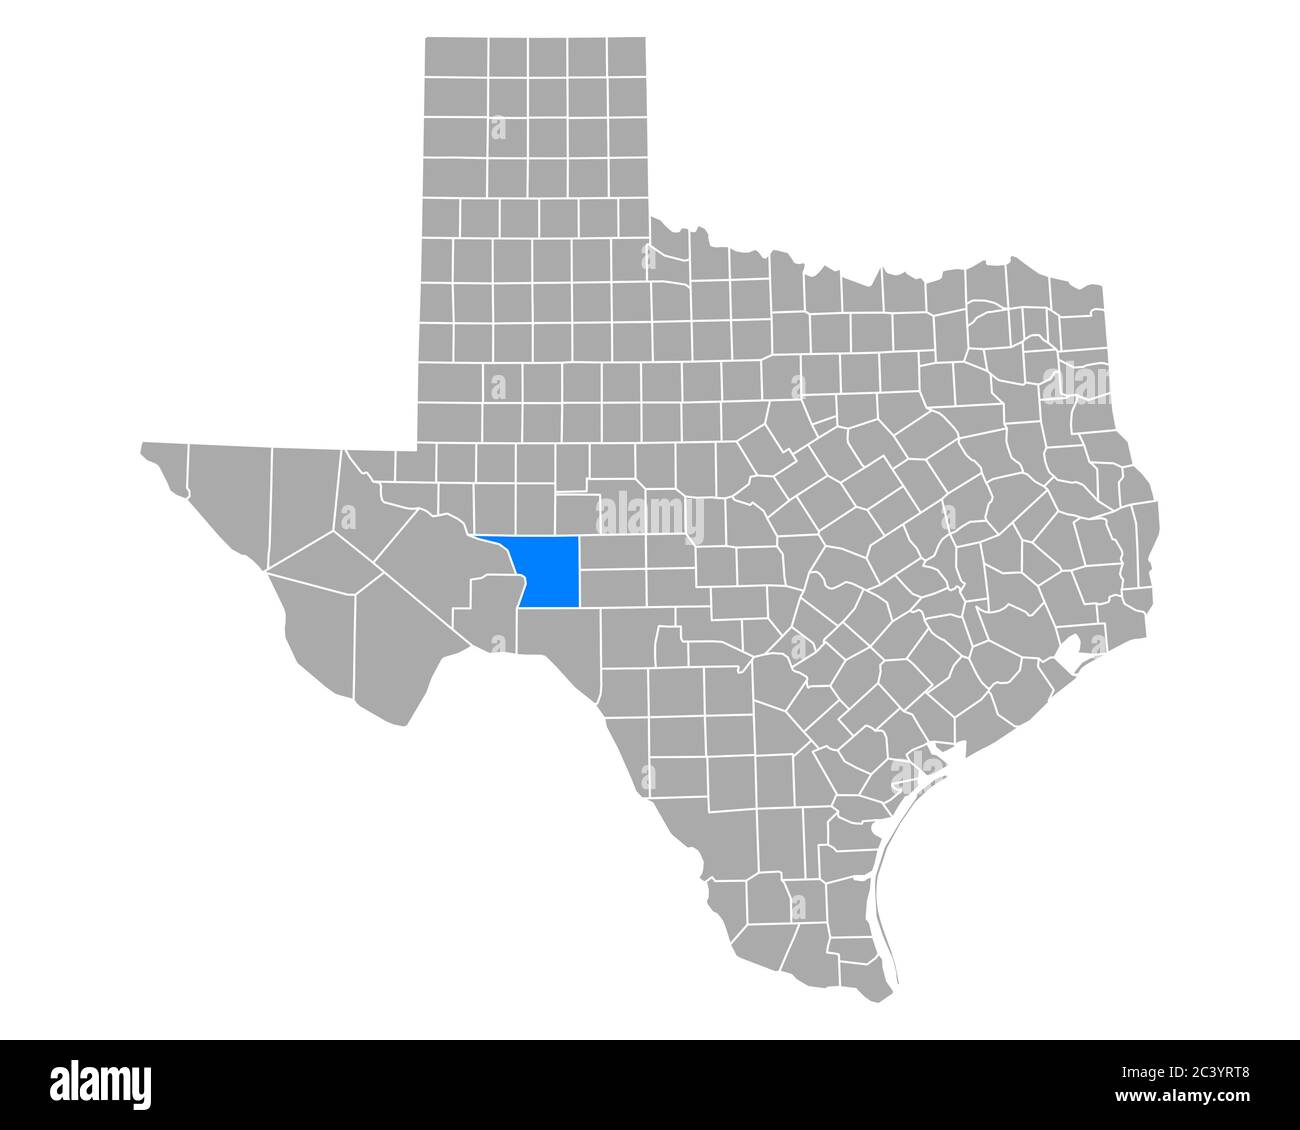 Map Of Crockett In Texas 2C3YRT8 